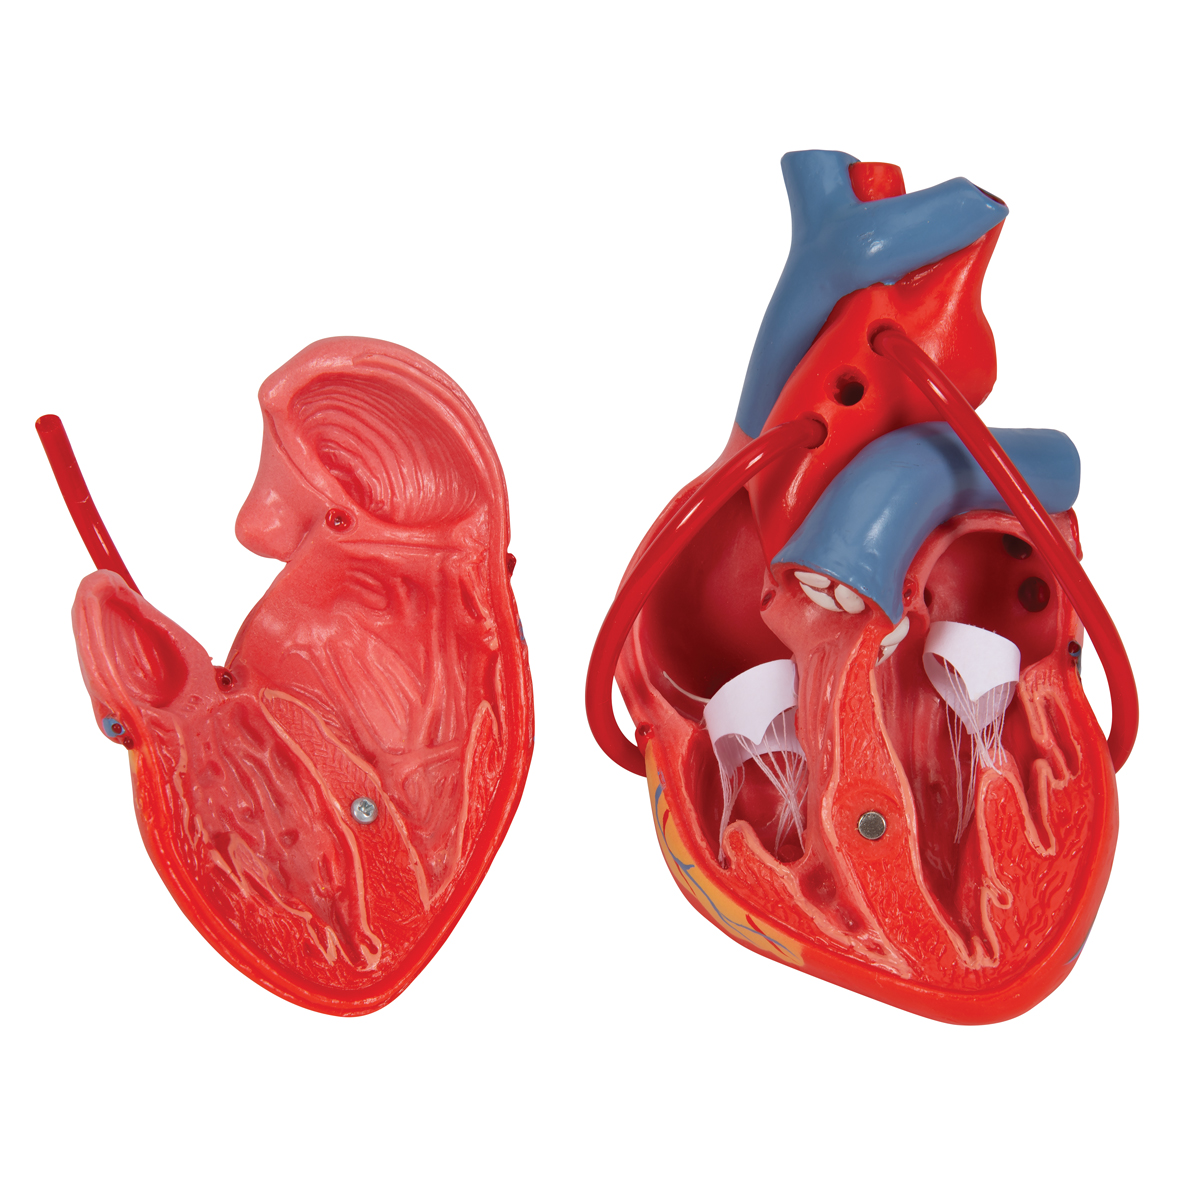 heart model presentation